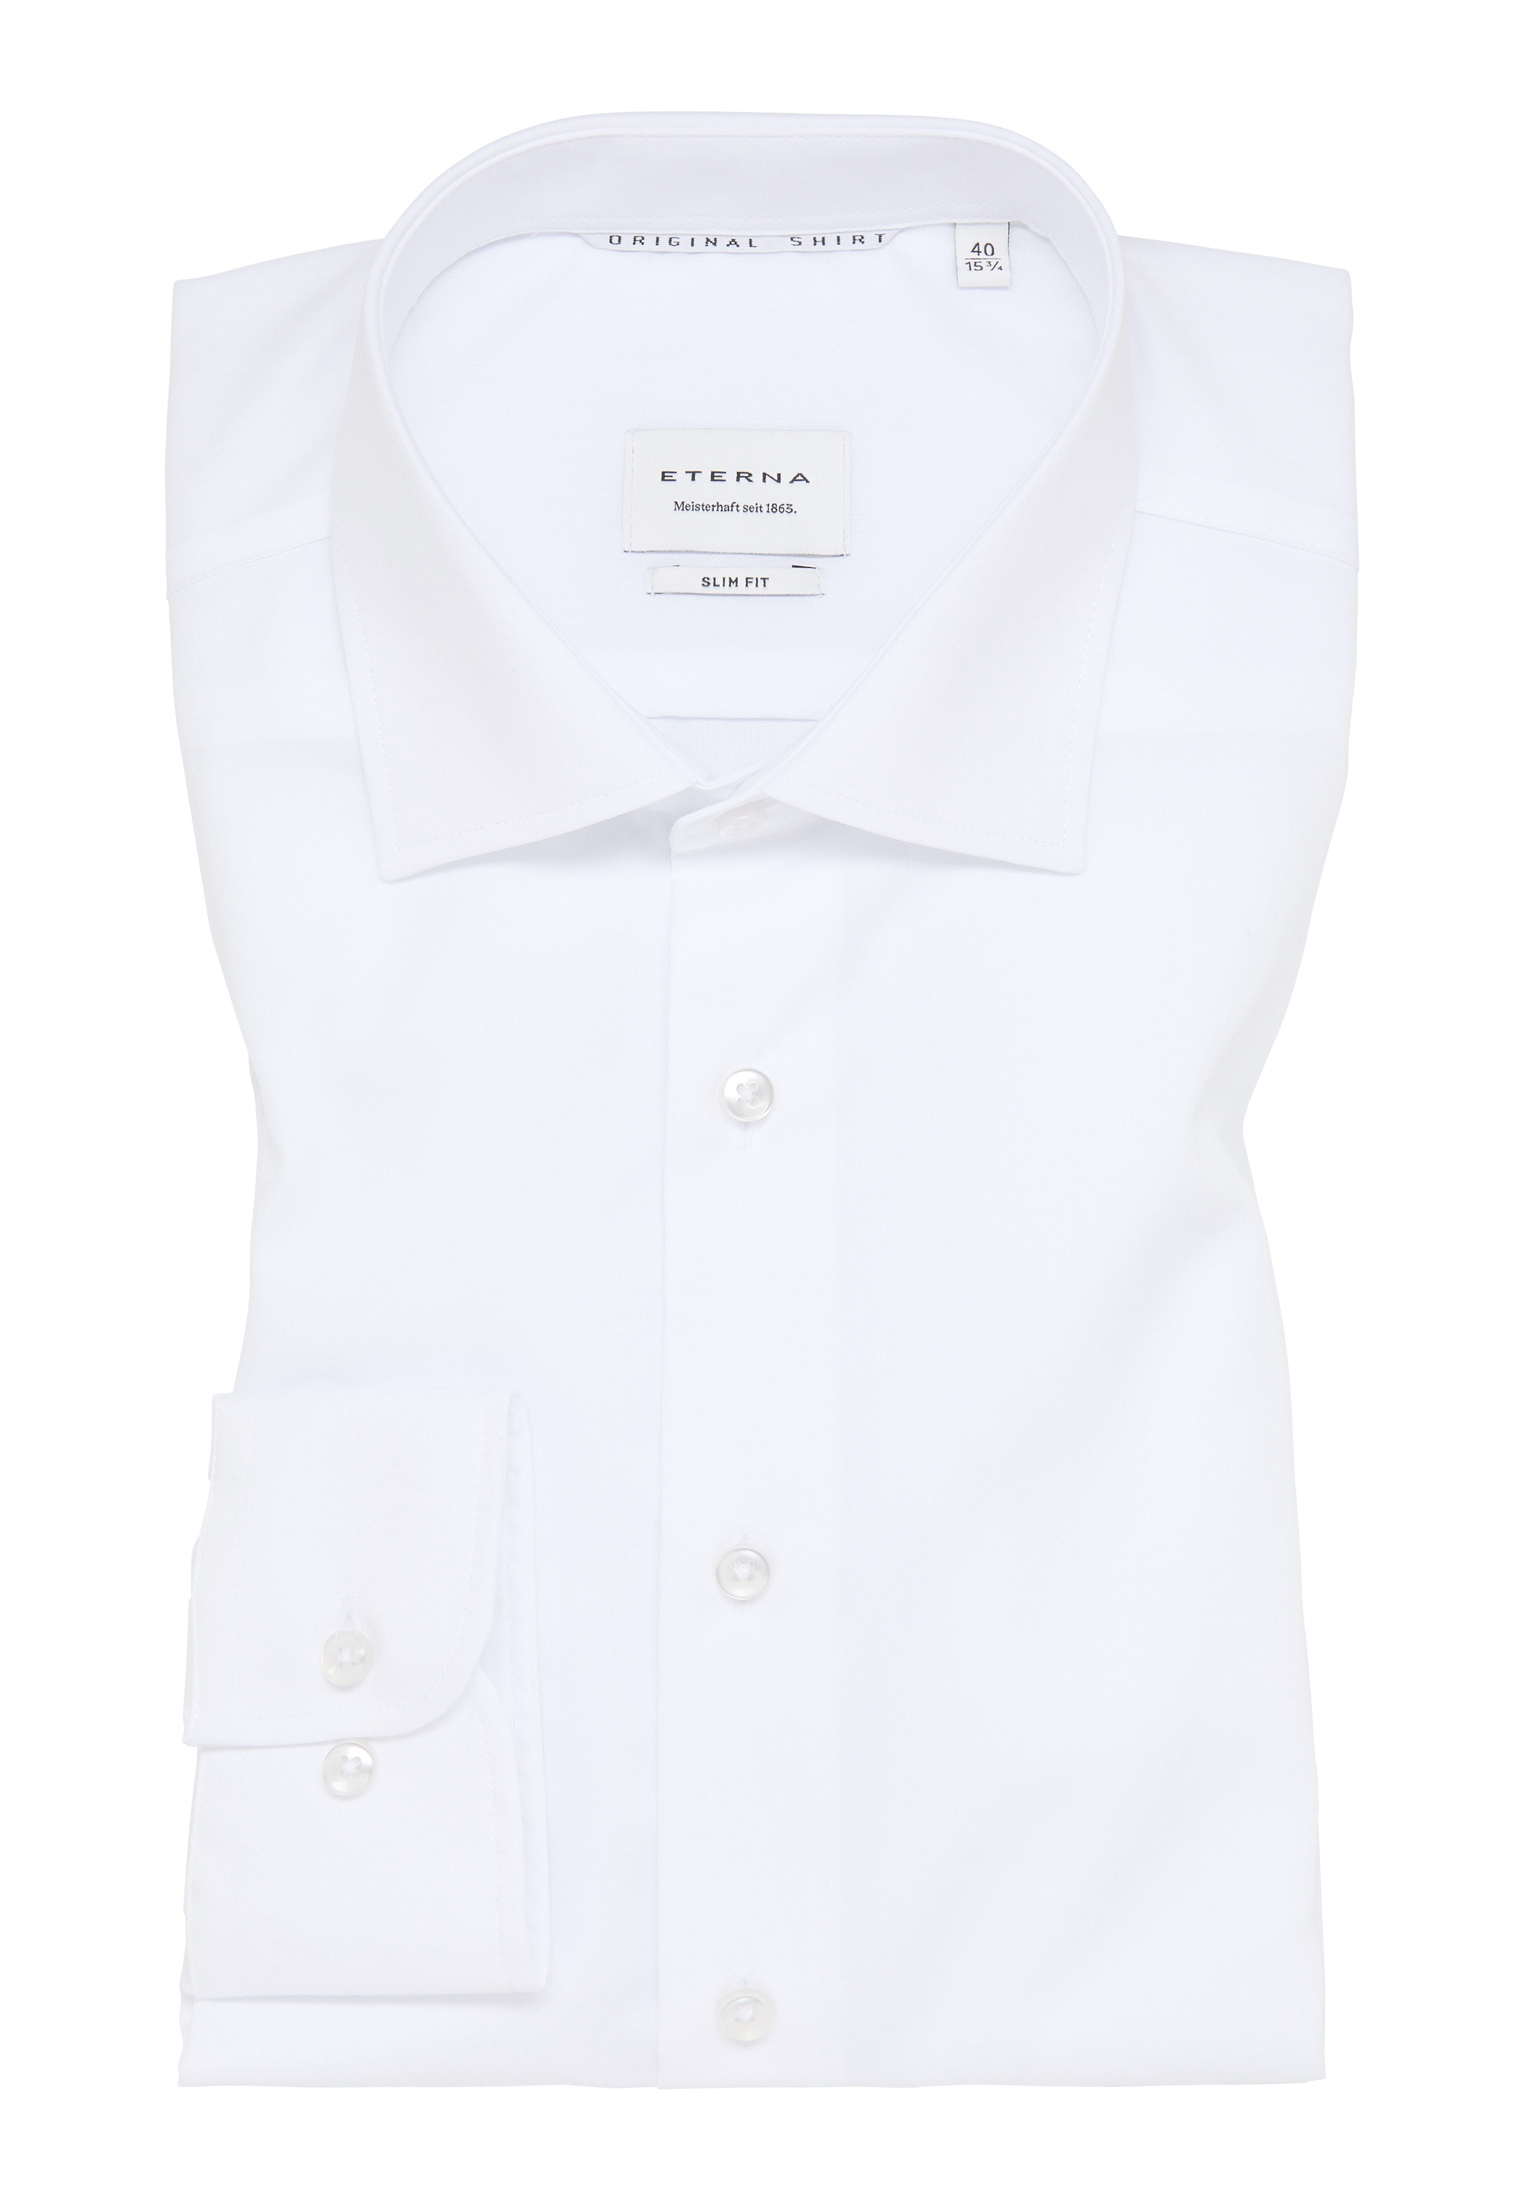 SLIM FIT Original Langarm weiß 40 weiß | Shirt | in | unifarben 1SH12598-00-01-40-1/1 